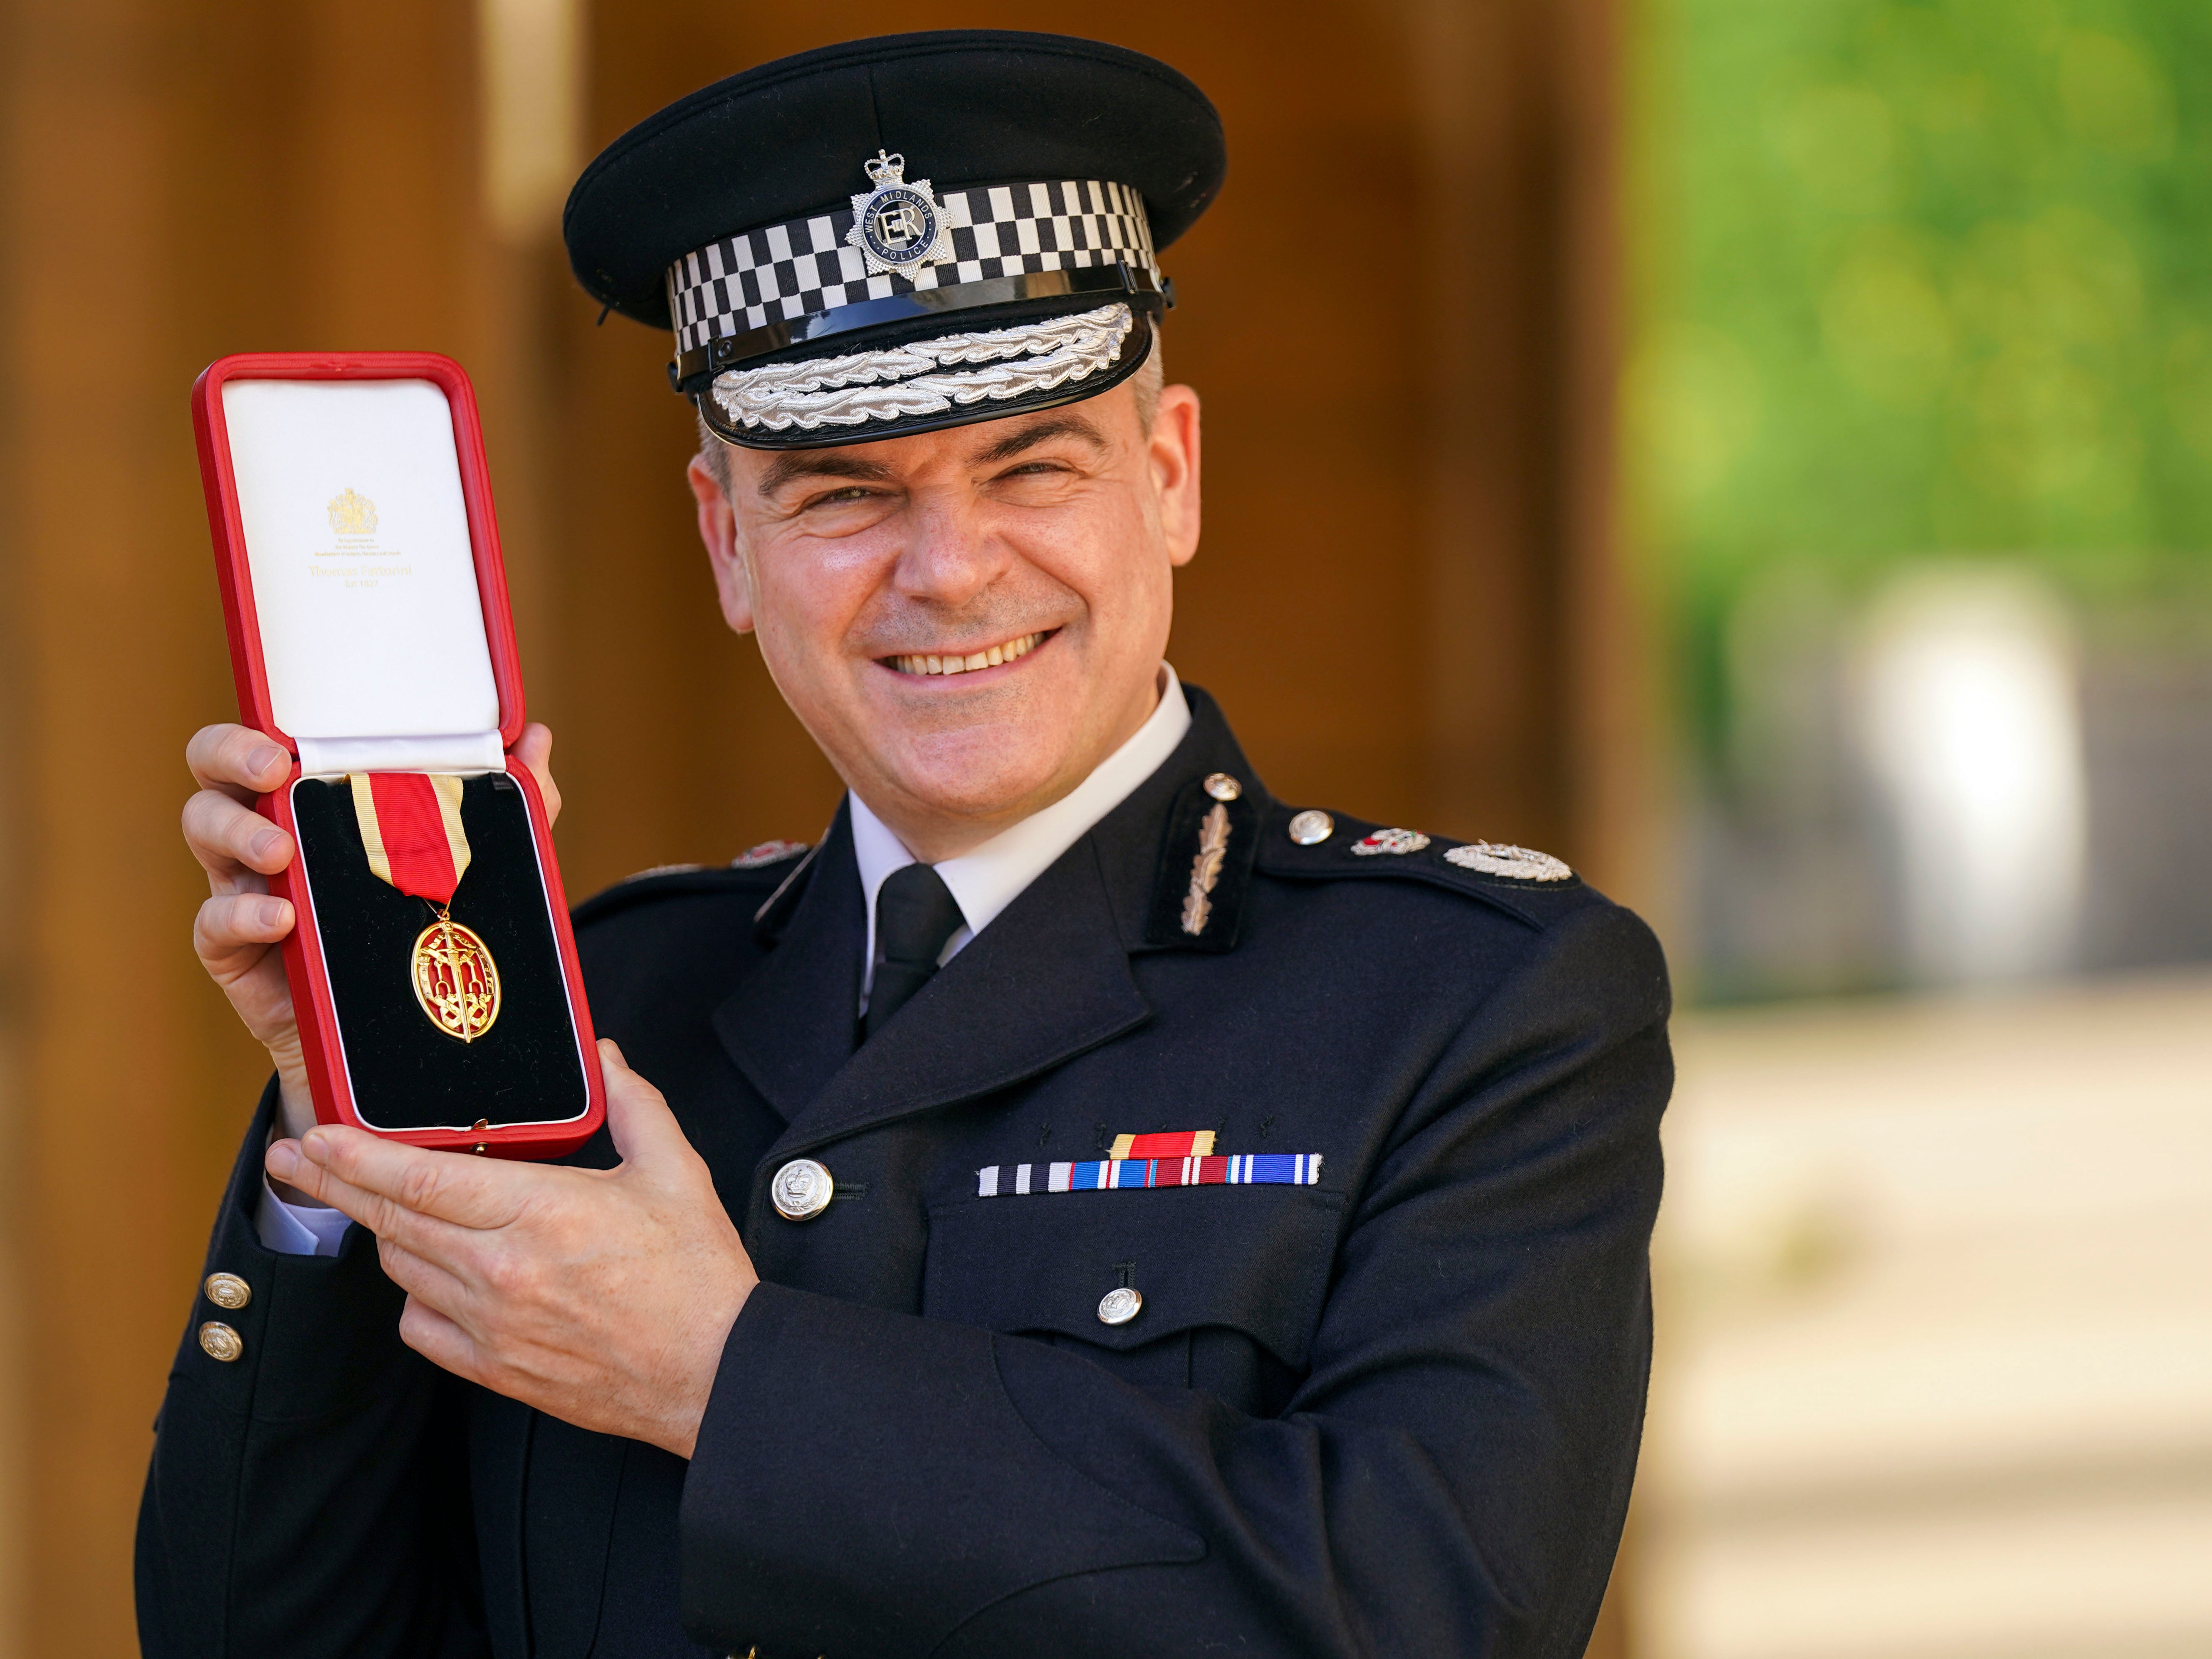 Sir David Thompson says recording petty disputes as crimes distorts figures